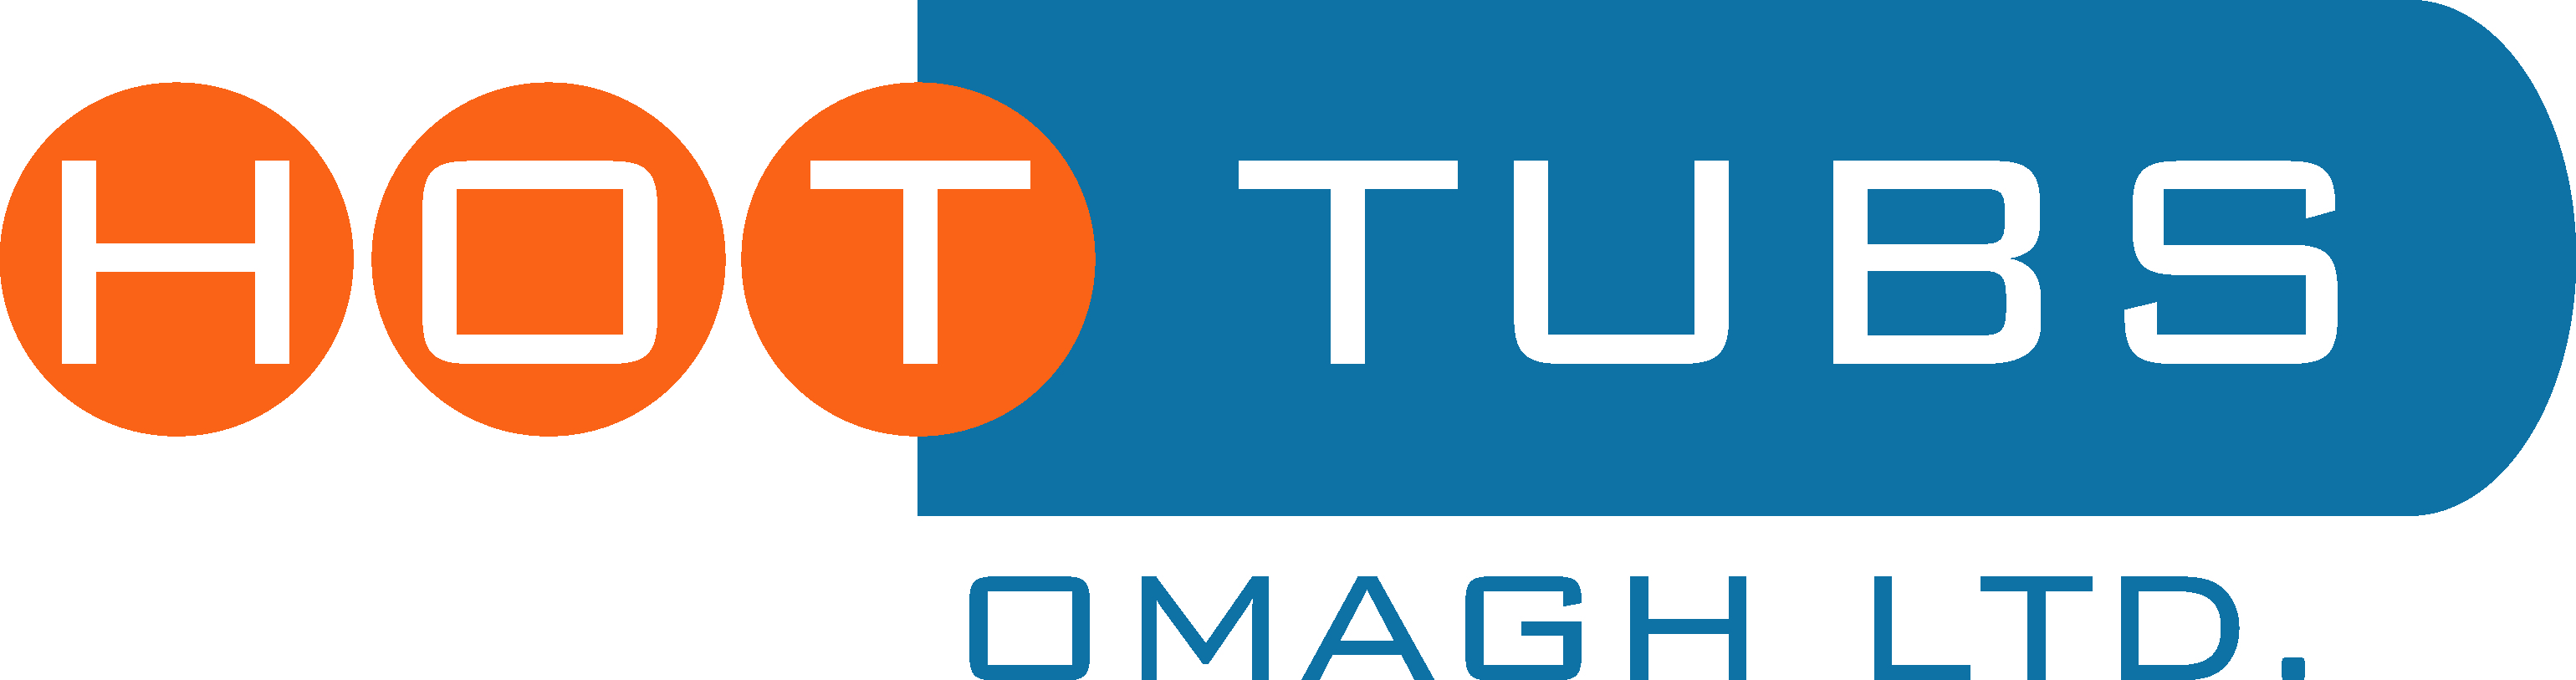 Business Profile - Hot Tubs Omagh Ltd